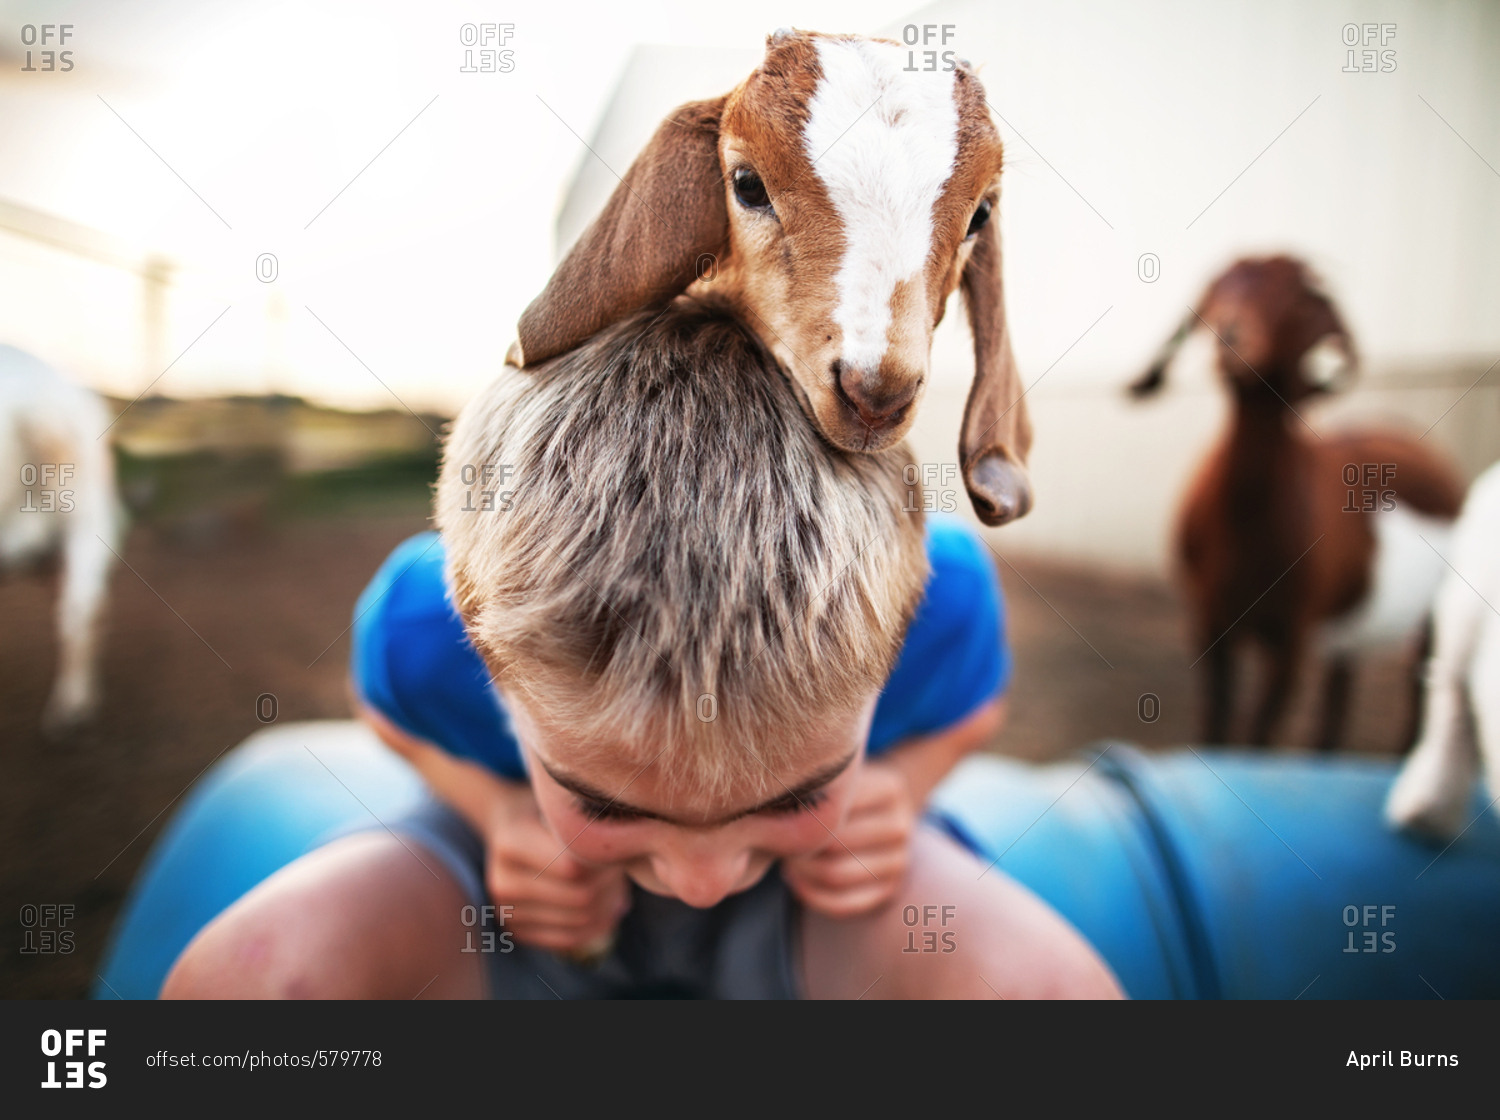 Baby goat climbing on a boys back